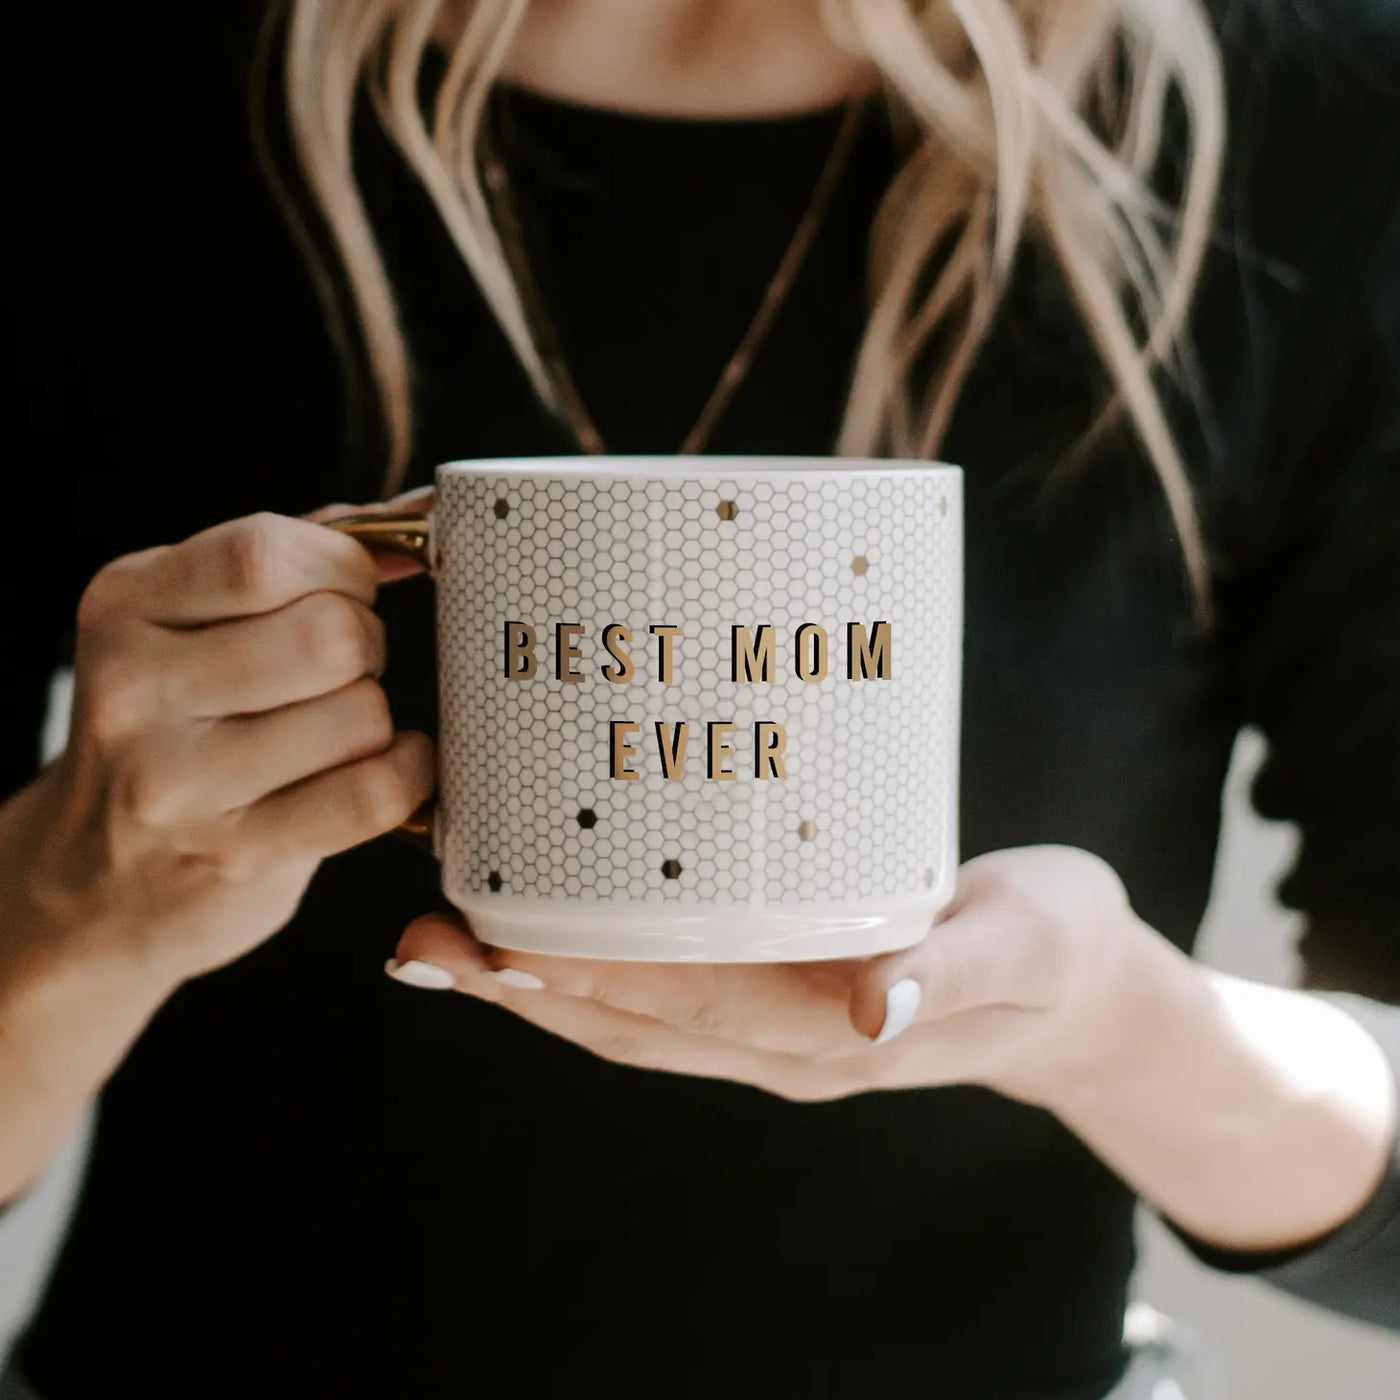 Best Mom Ever - Gold Honeycomb Tile Coffee Mug